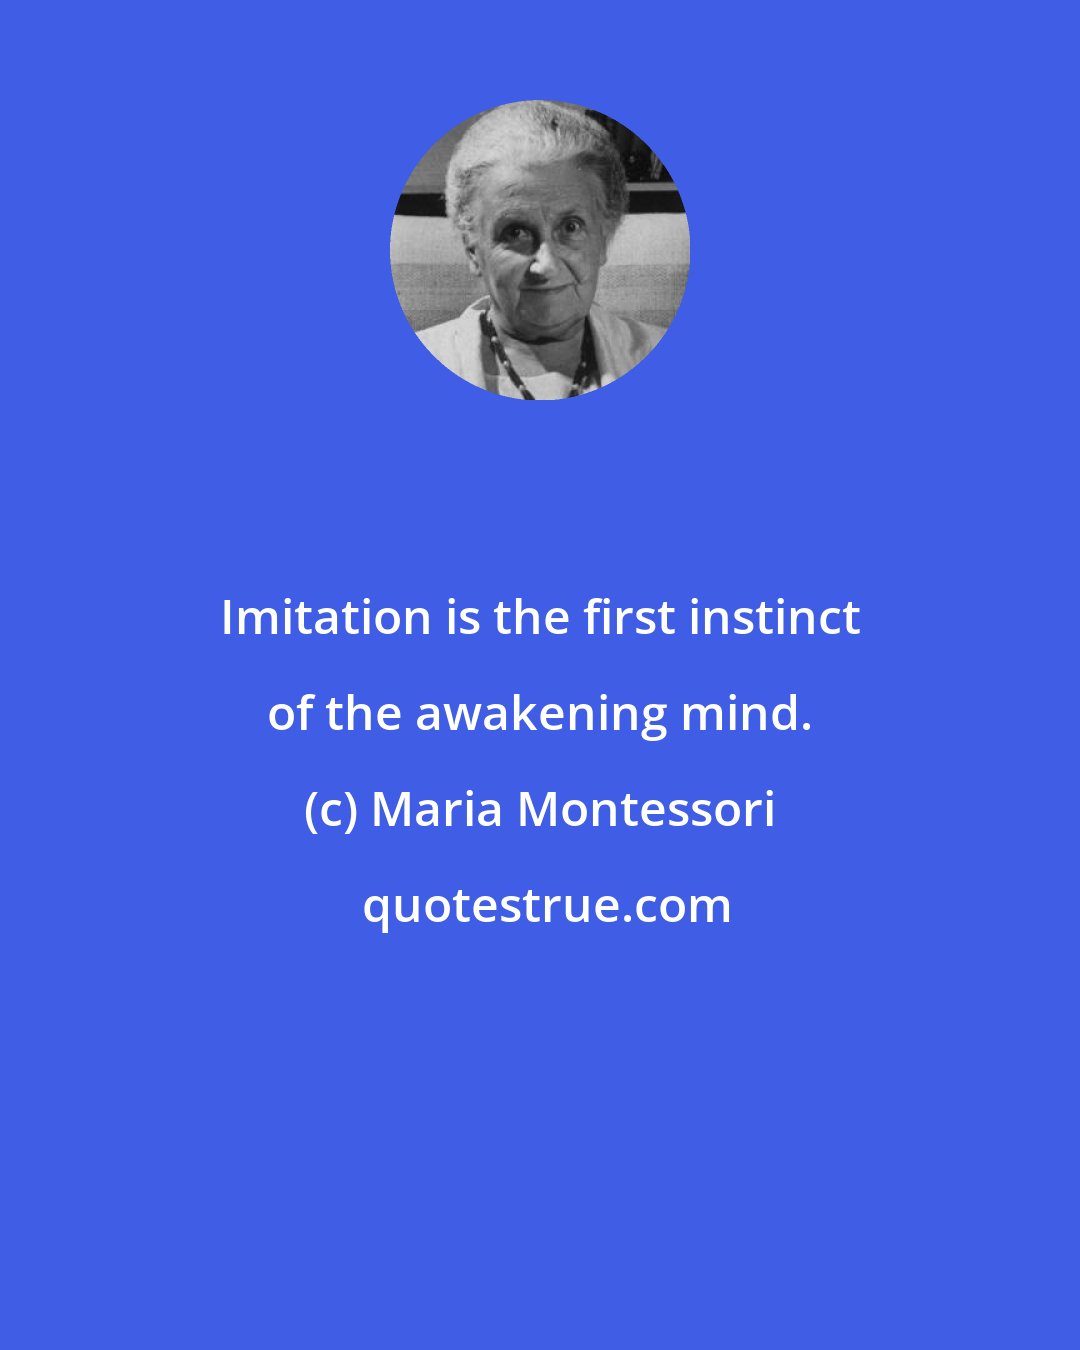 Maria Montessori: Imitation is the first instinct of the awakening mind.